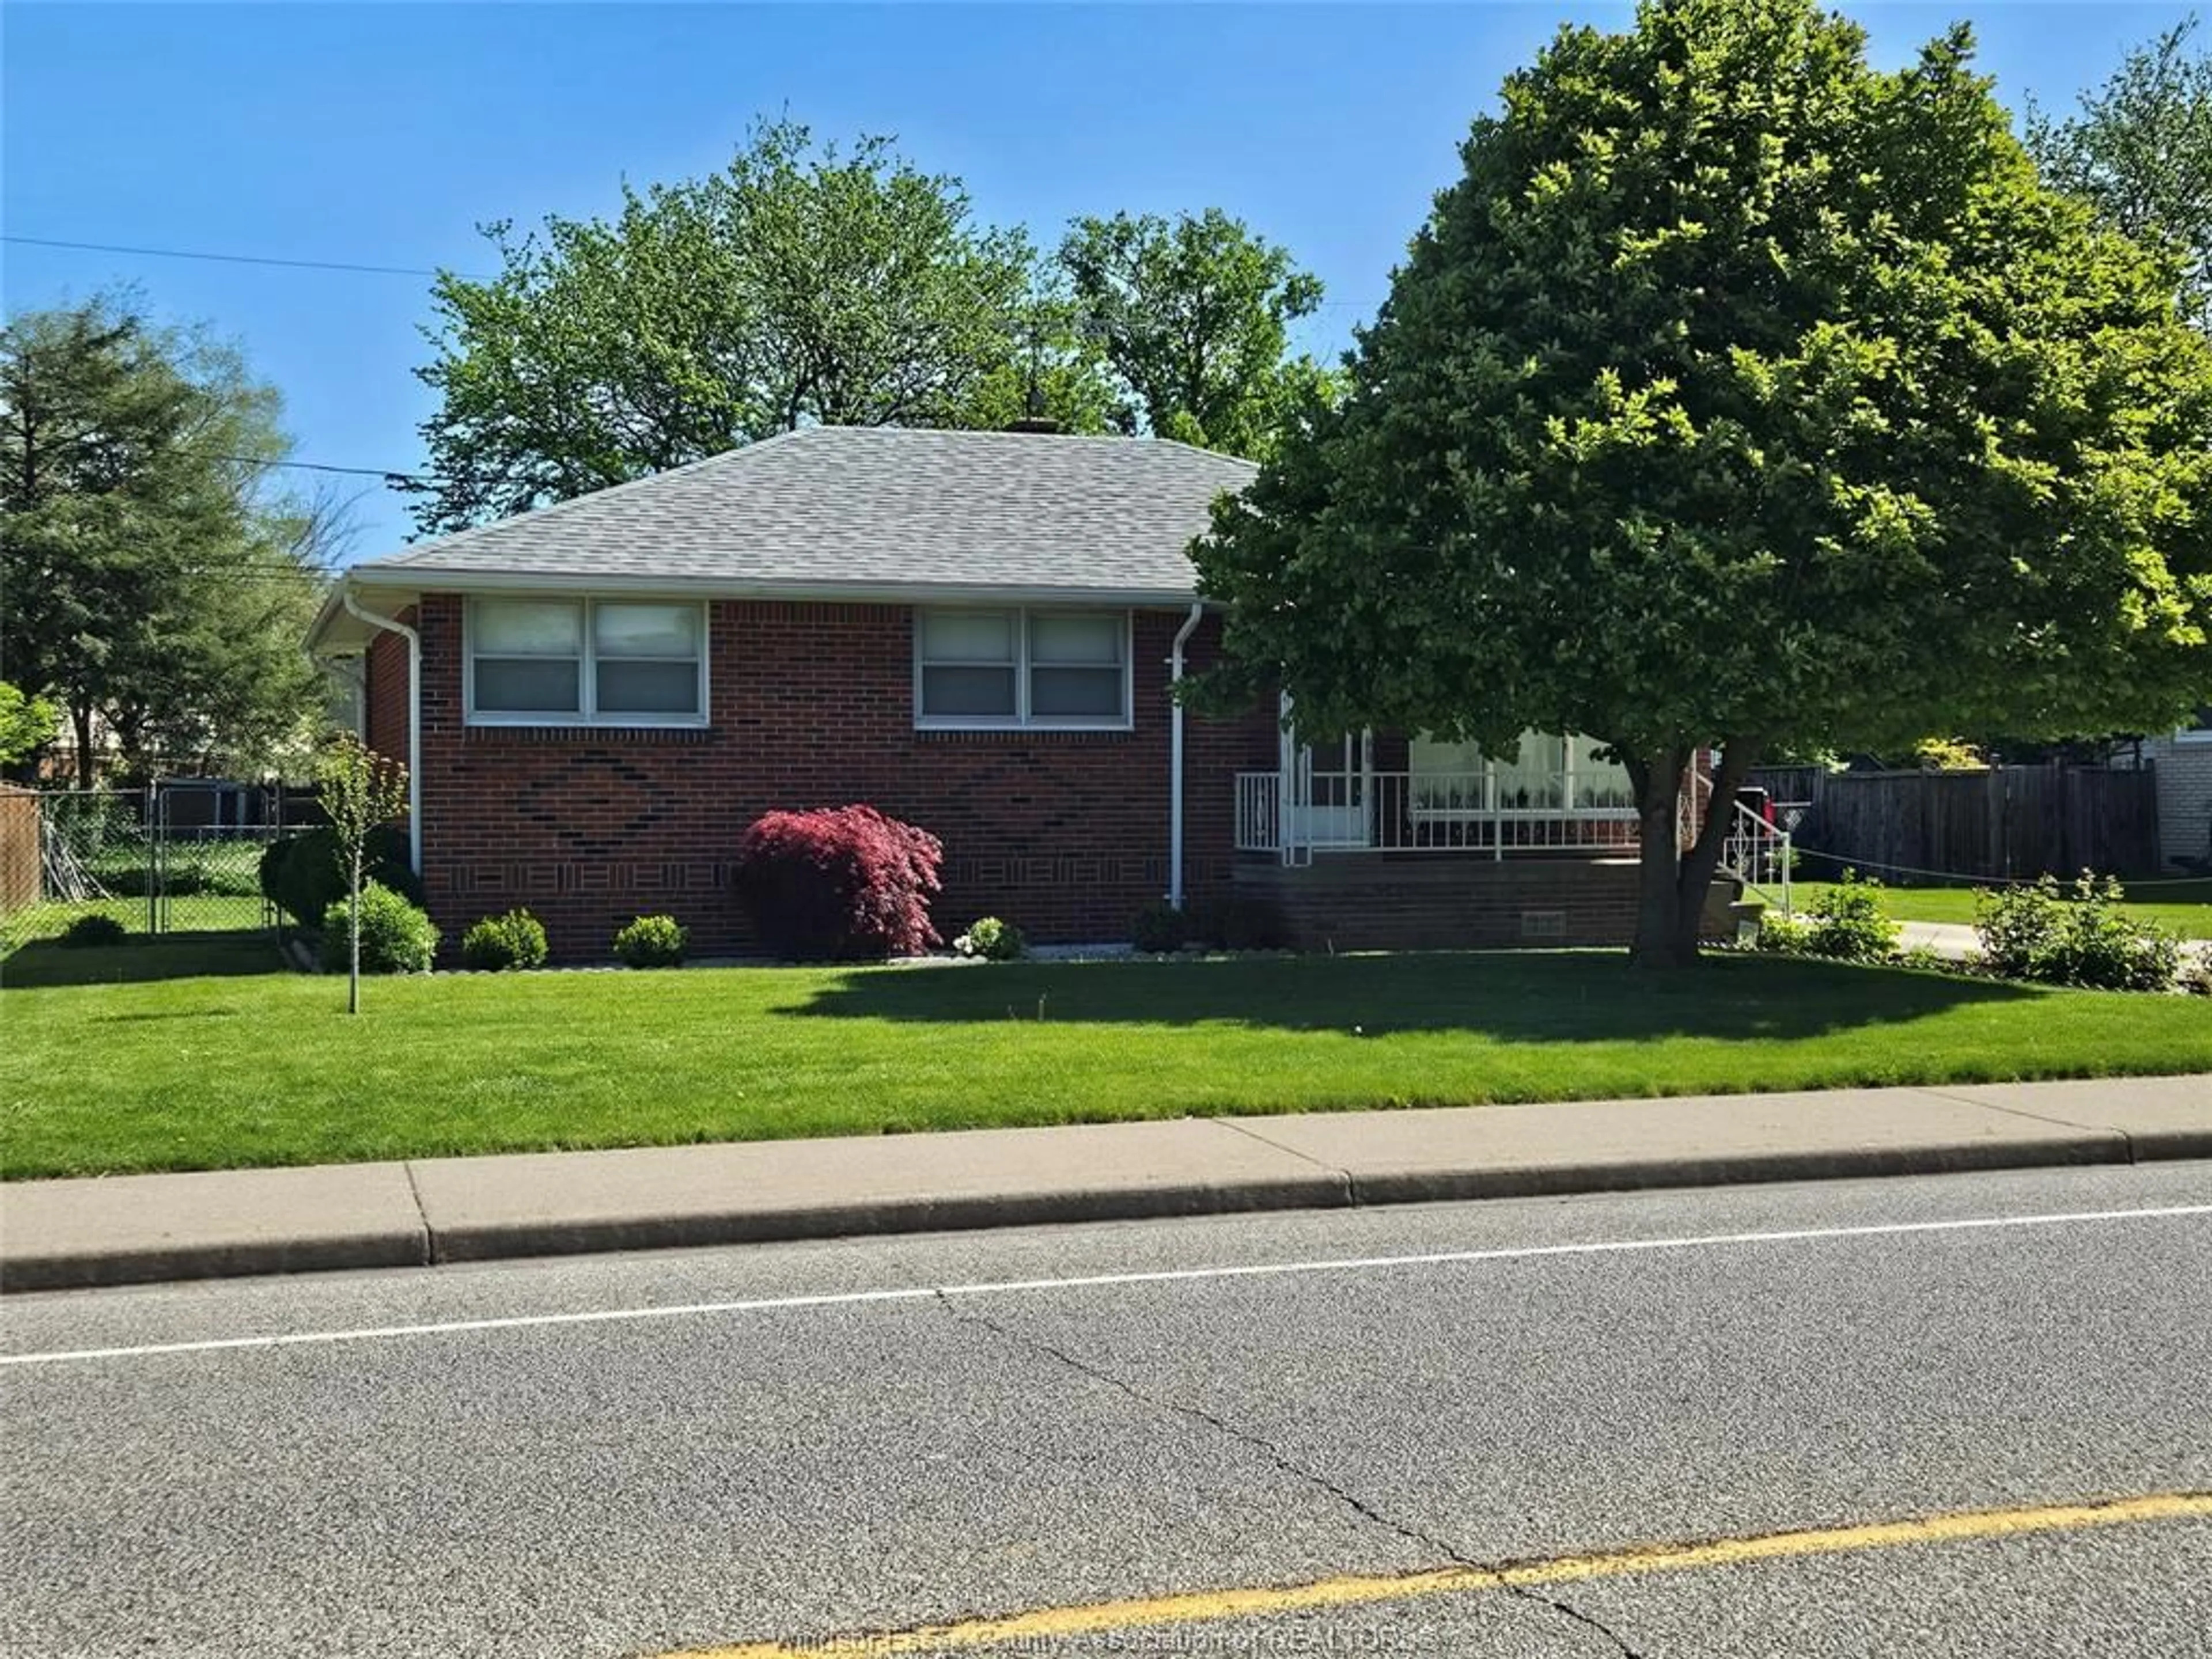 Frontside or backside of a home for 1602 CAMPBELL, Windsor Ontario N9B 2K6